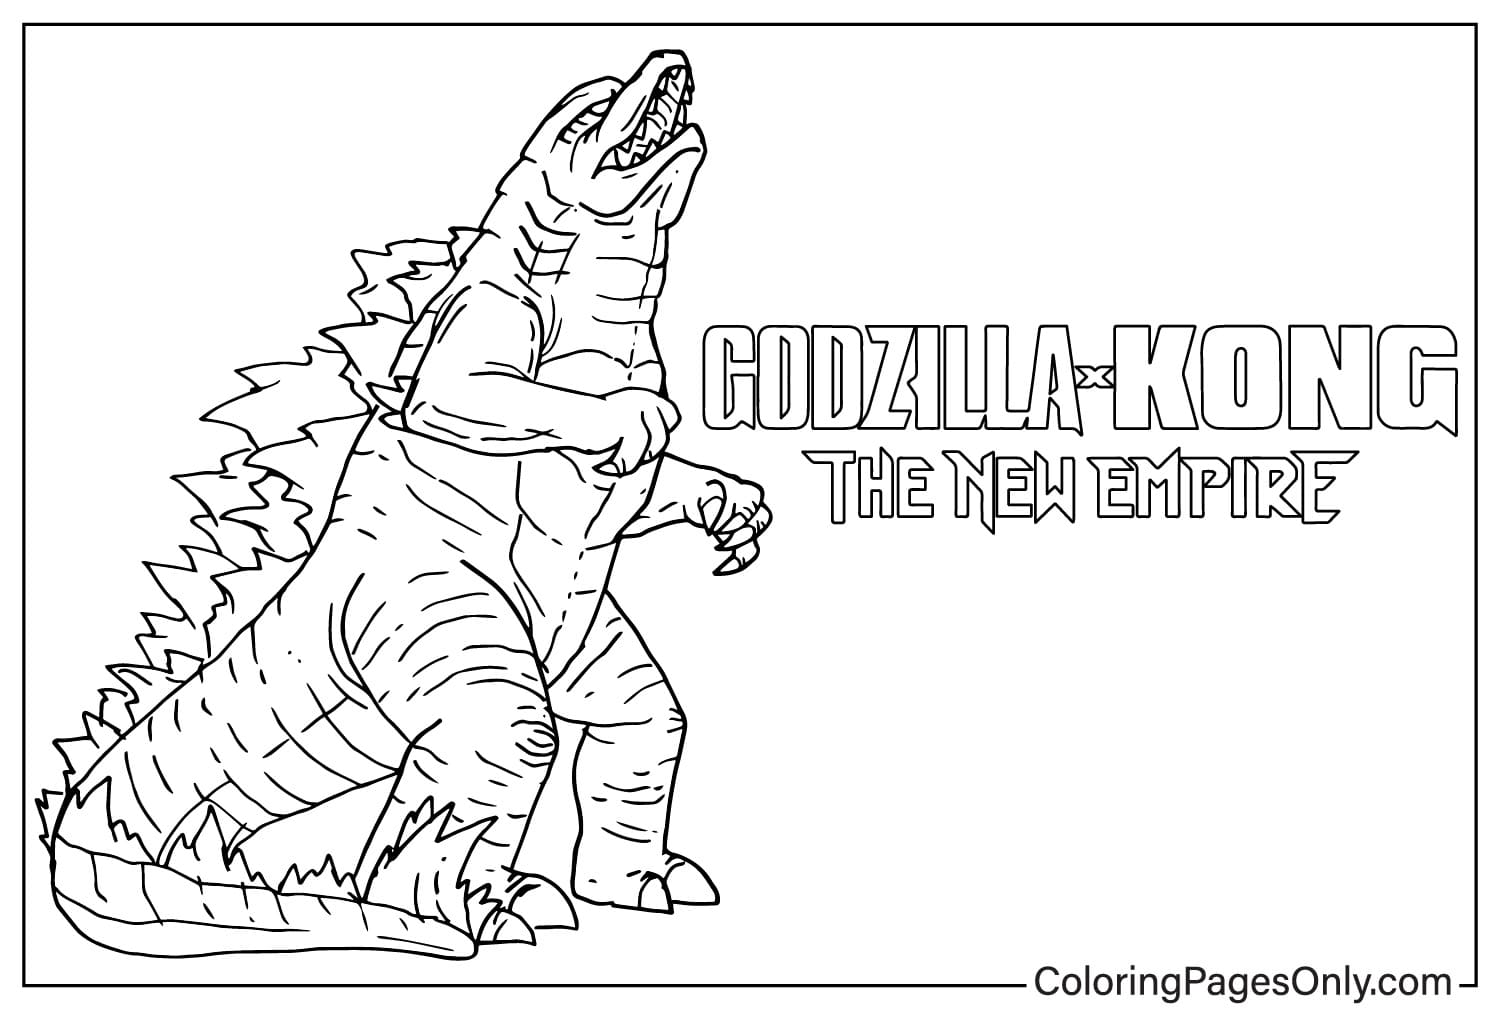 Coloriage Godzilla de Godzilla x Kong : Le Nouvel Empire